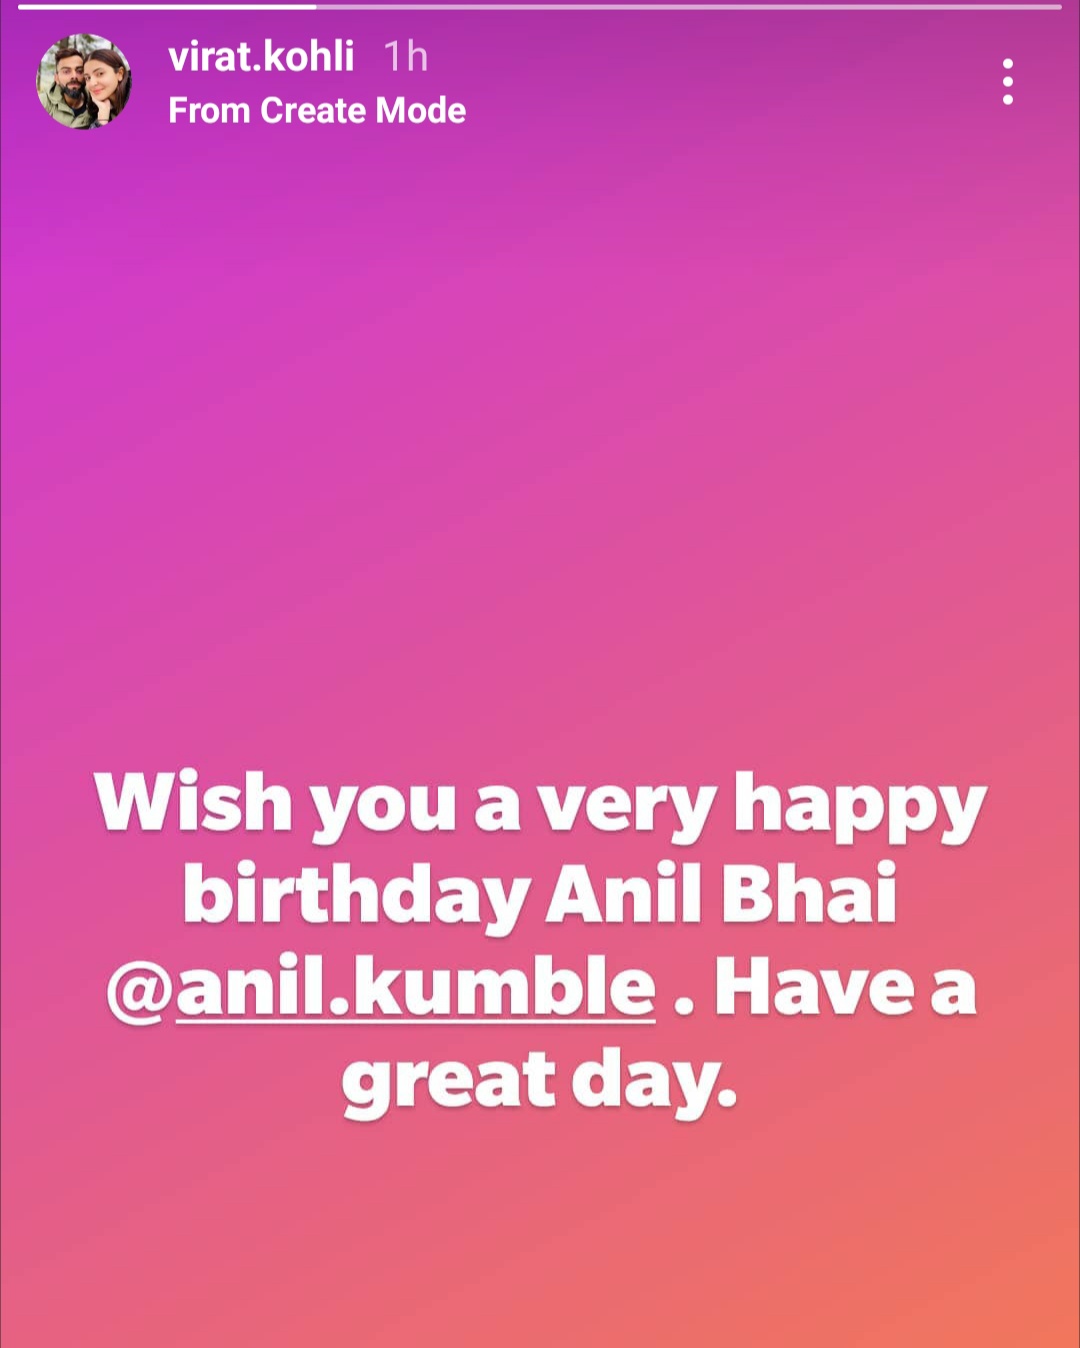 Rift no more? Virat Kohli's birthday wish for Anil Kumble